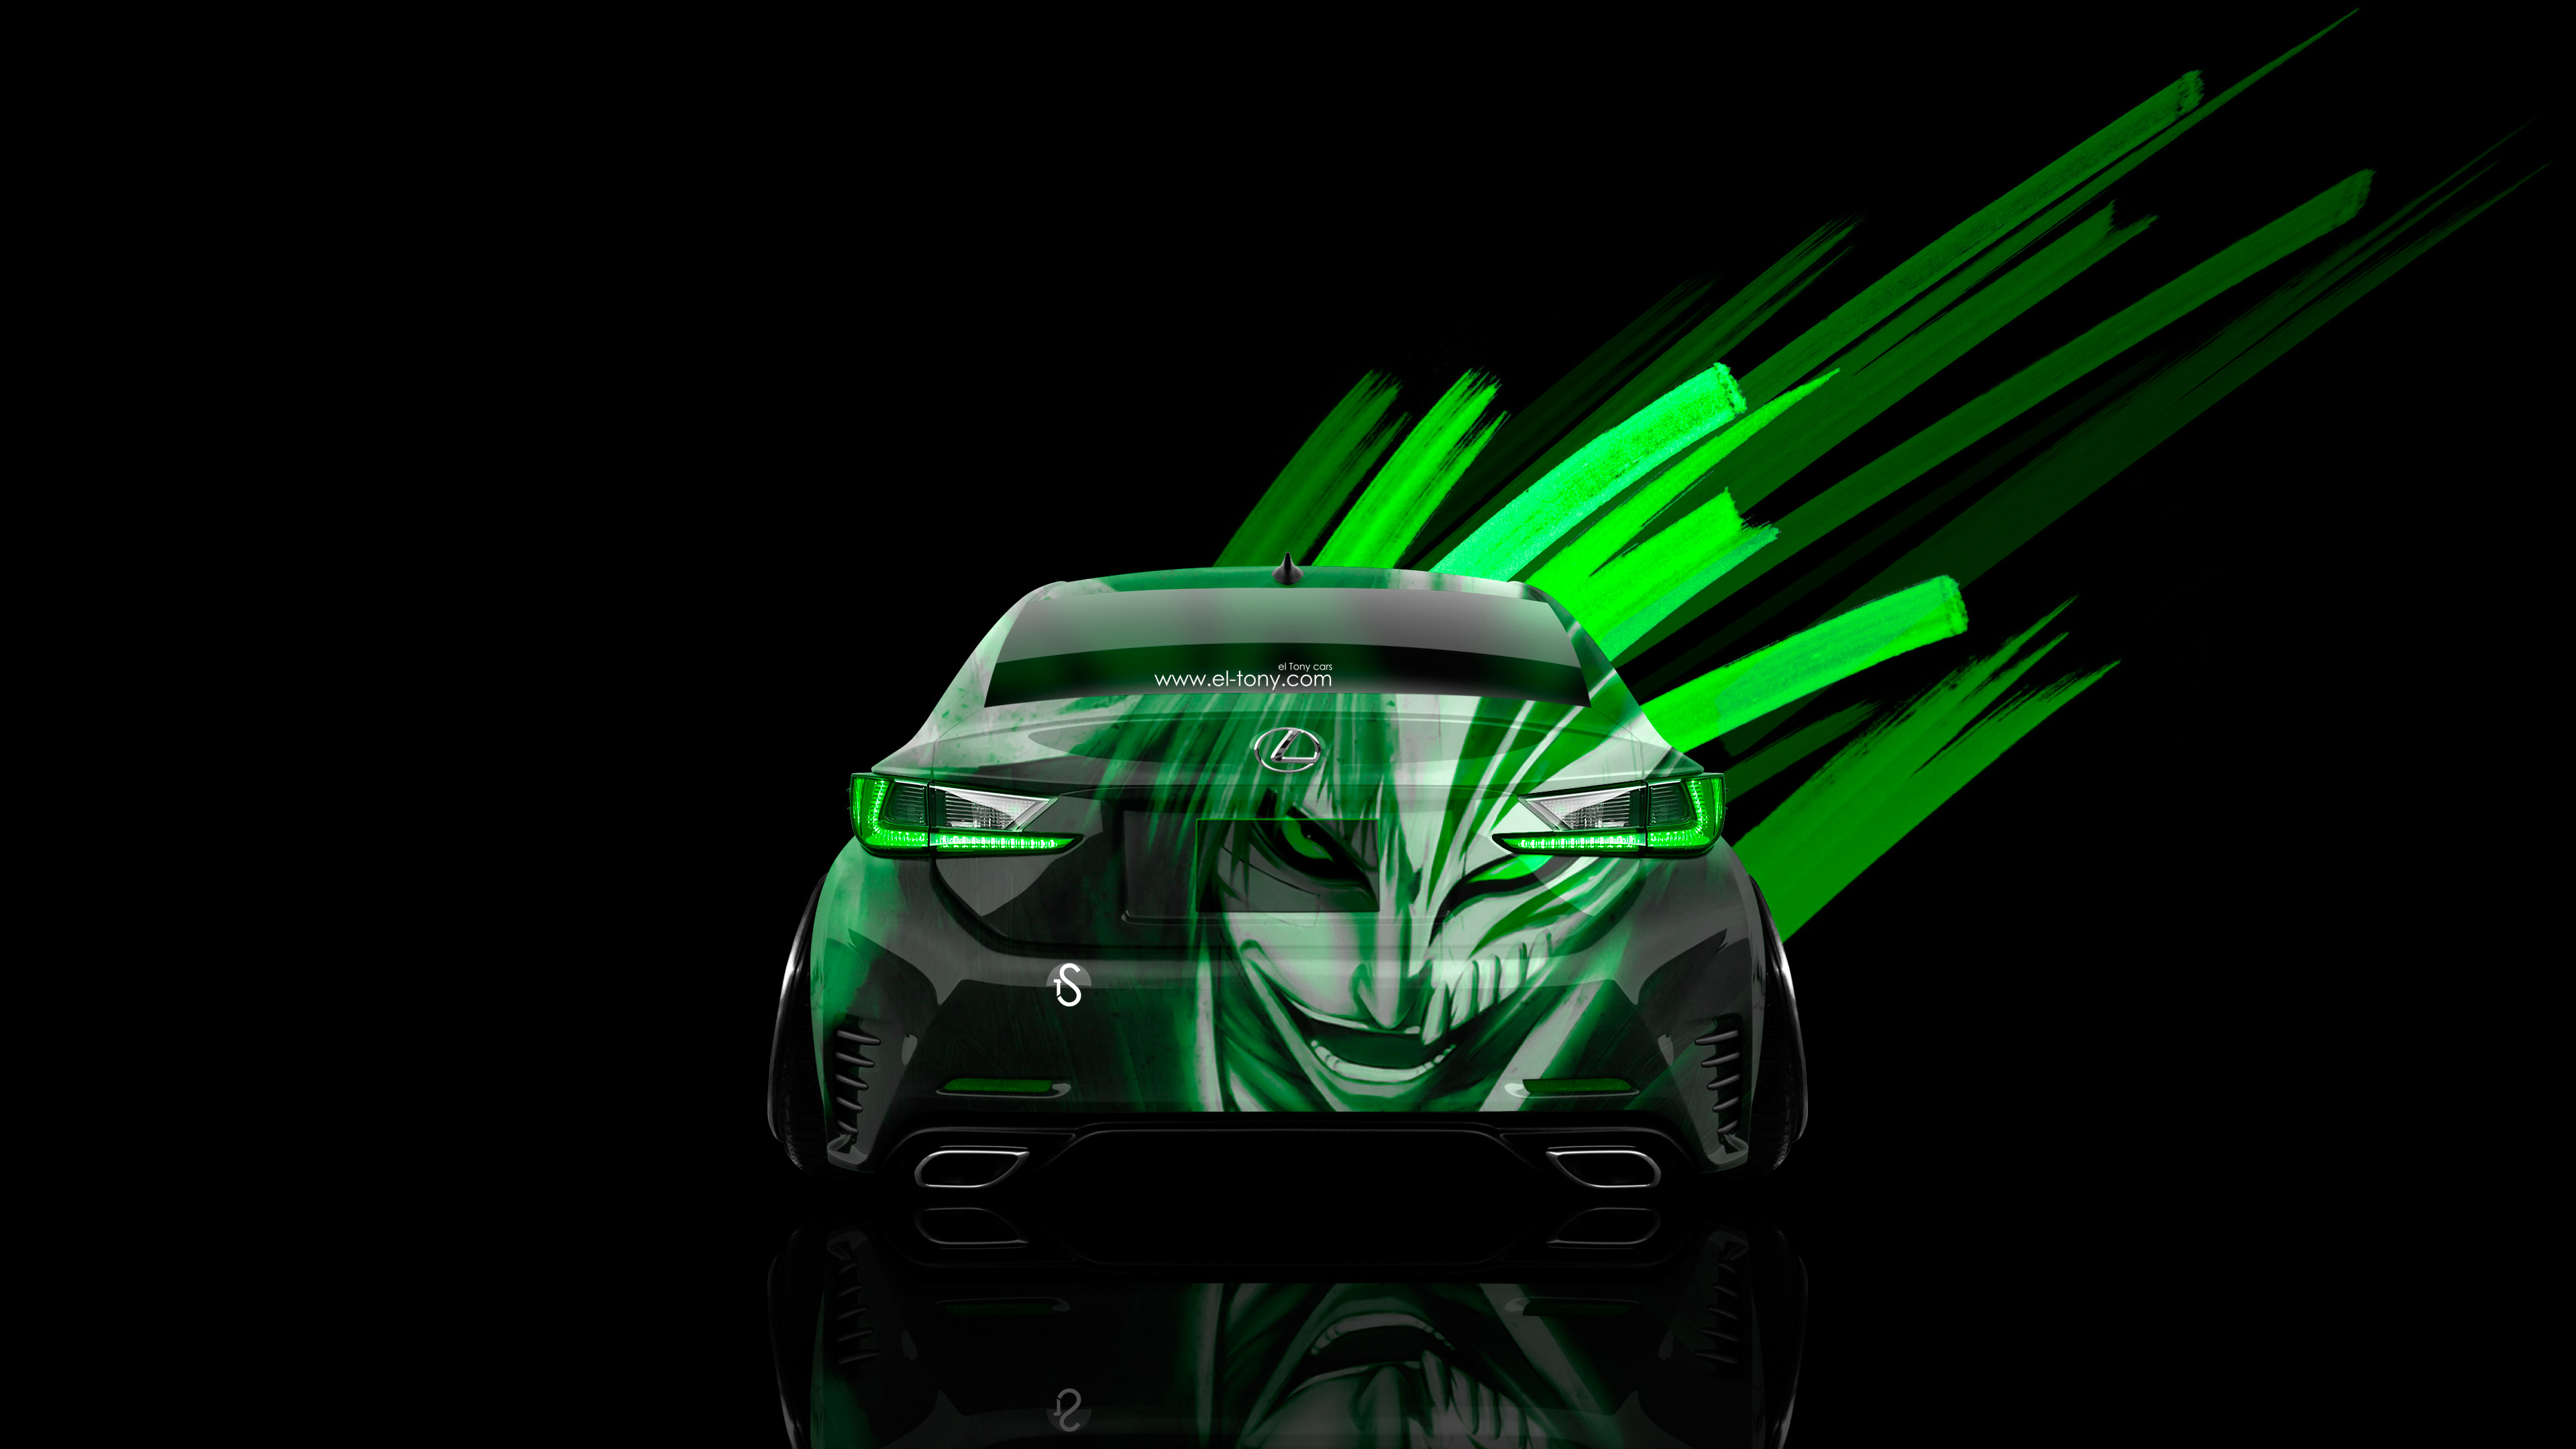 Jdm Back Anime Bleach Aerography Car Green Neon Effects 4k